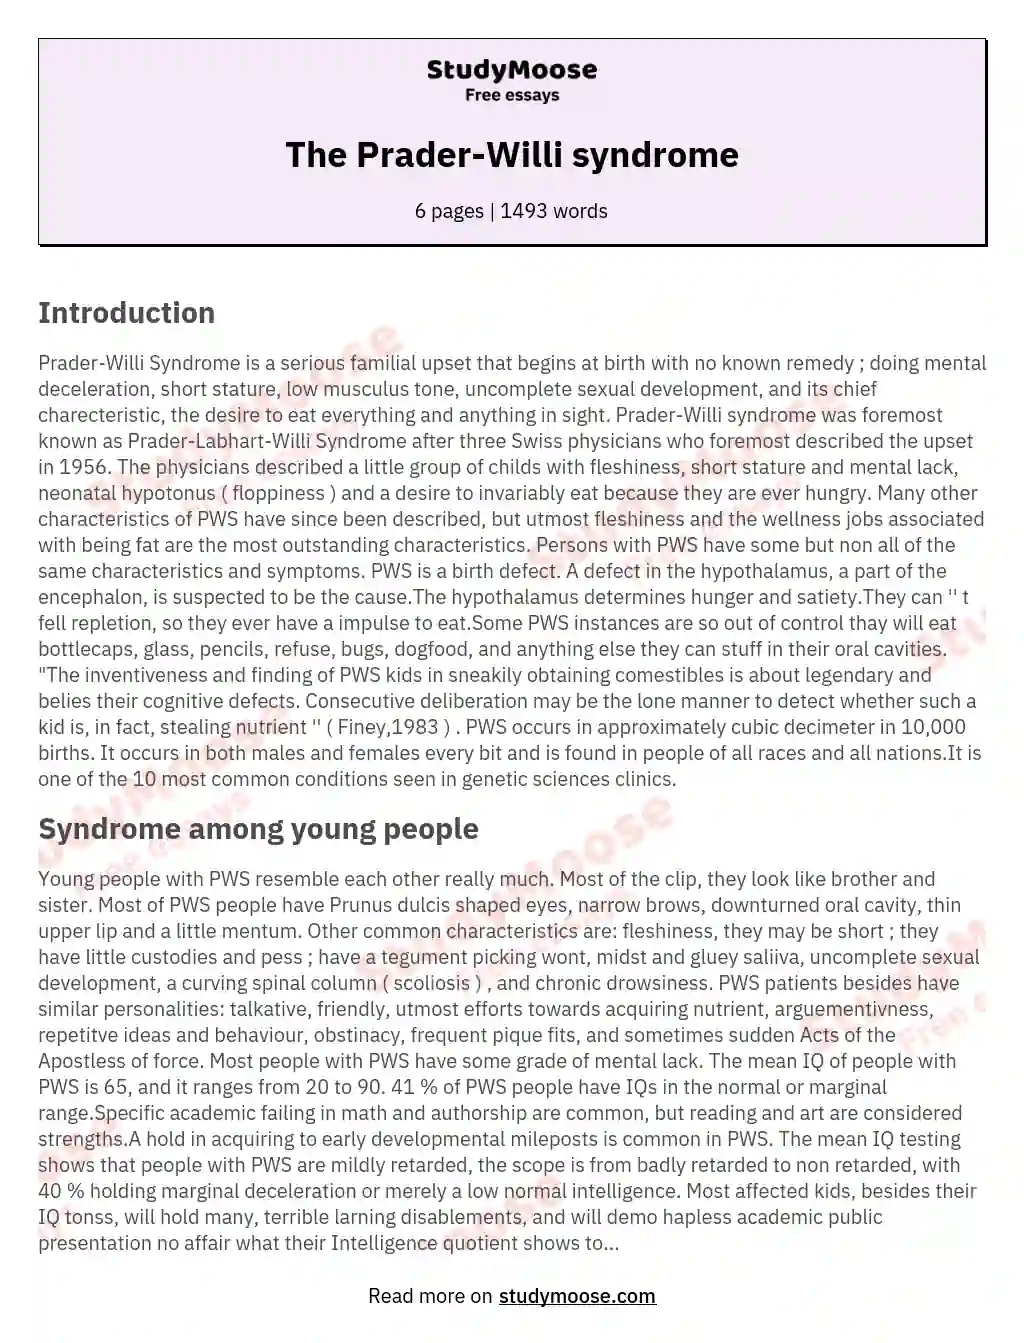 The Prader-Willi syndrome essay